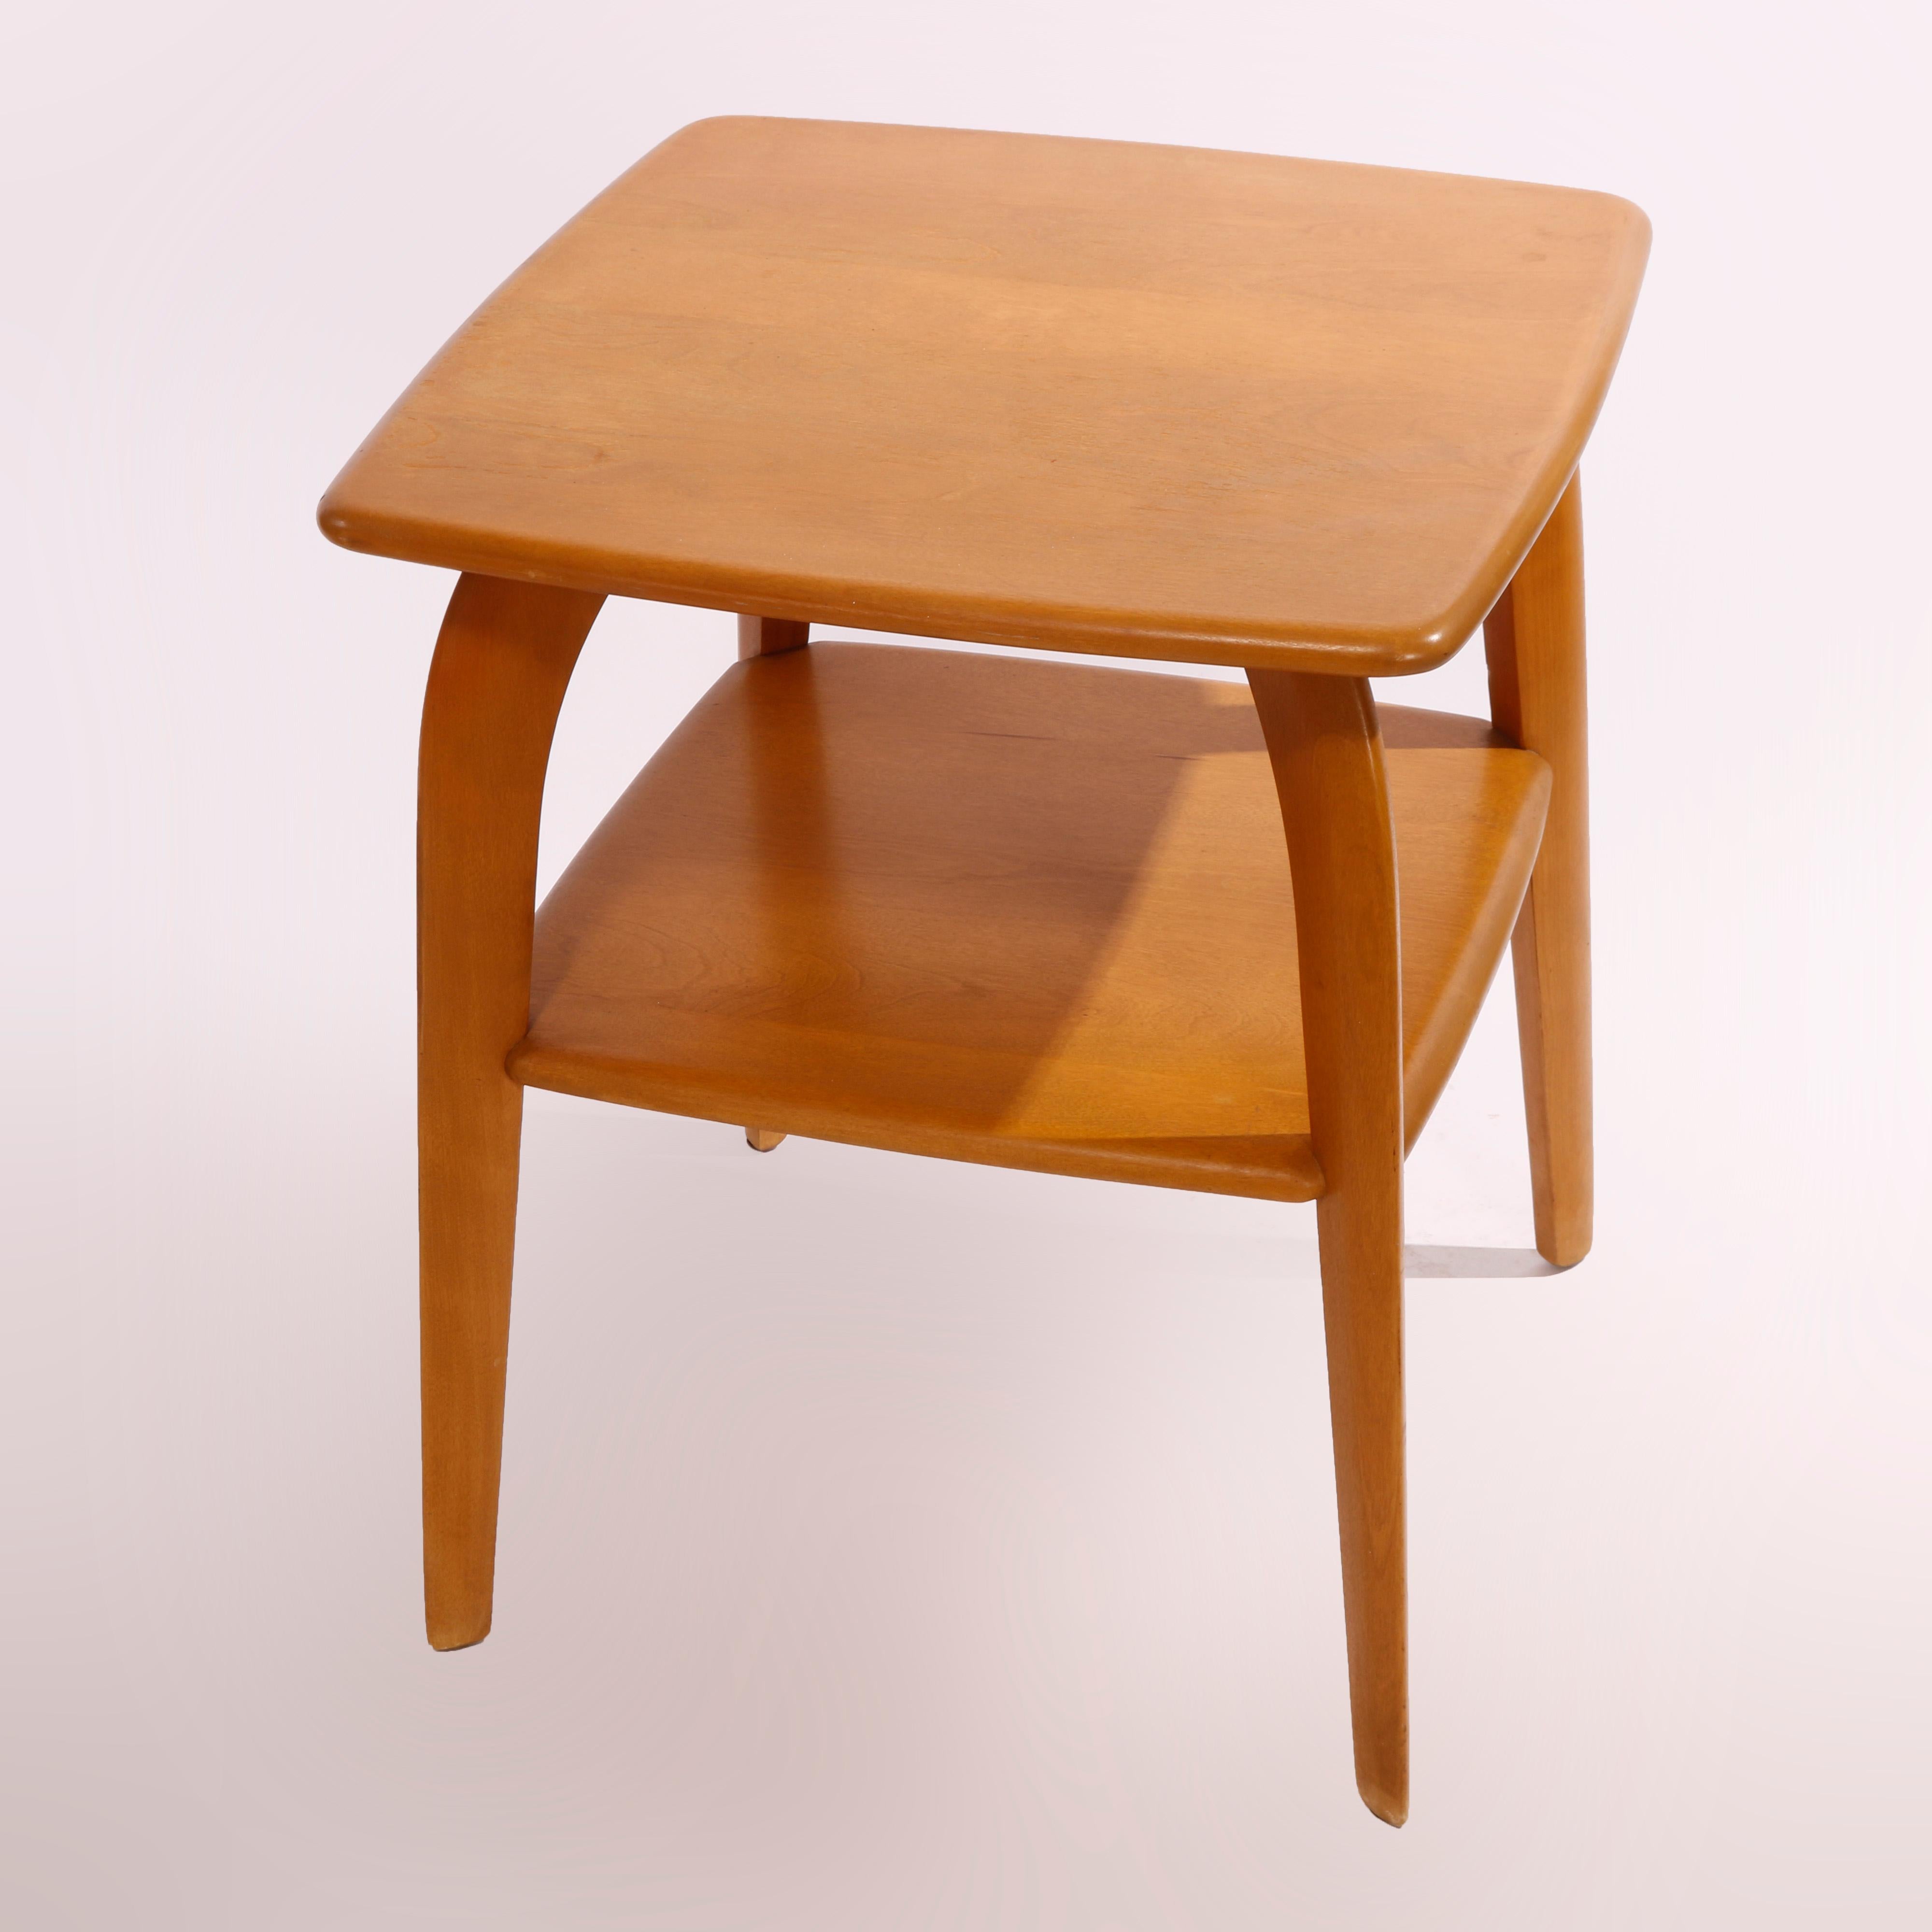 American Mid-Century Modern Heywood Wakefield Wishbone Side Table, Circa 1950